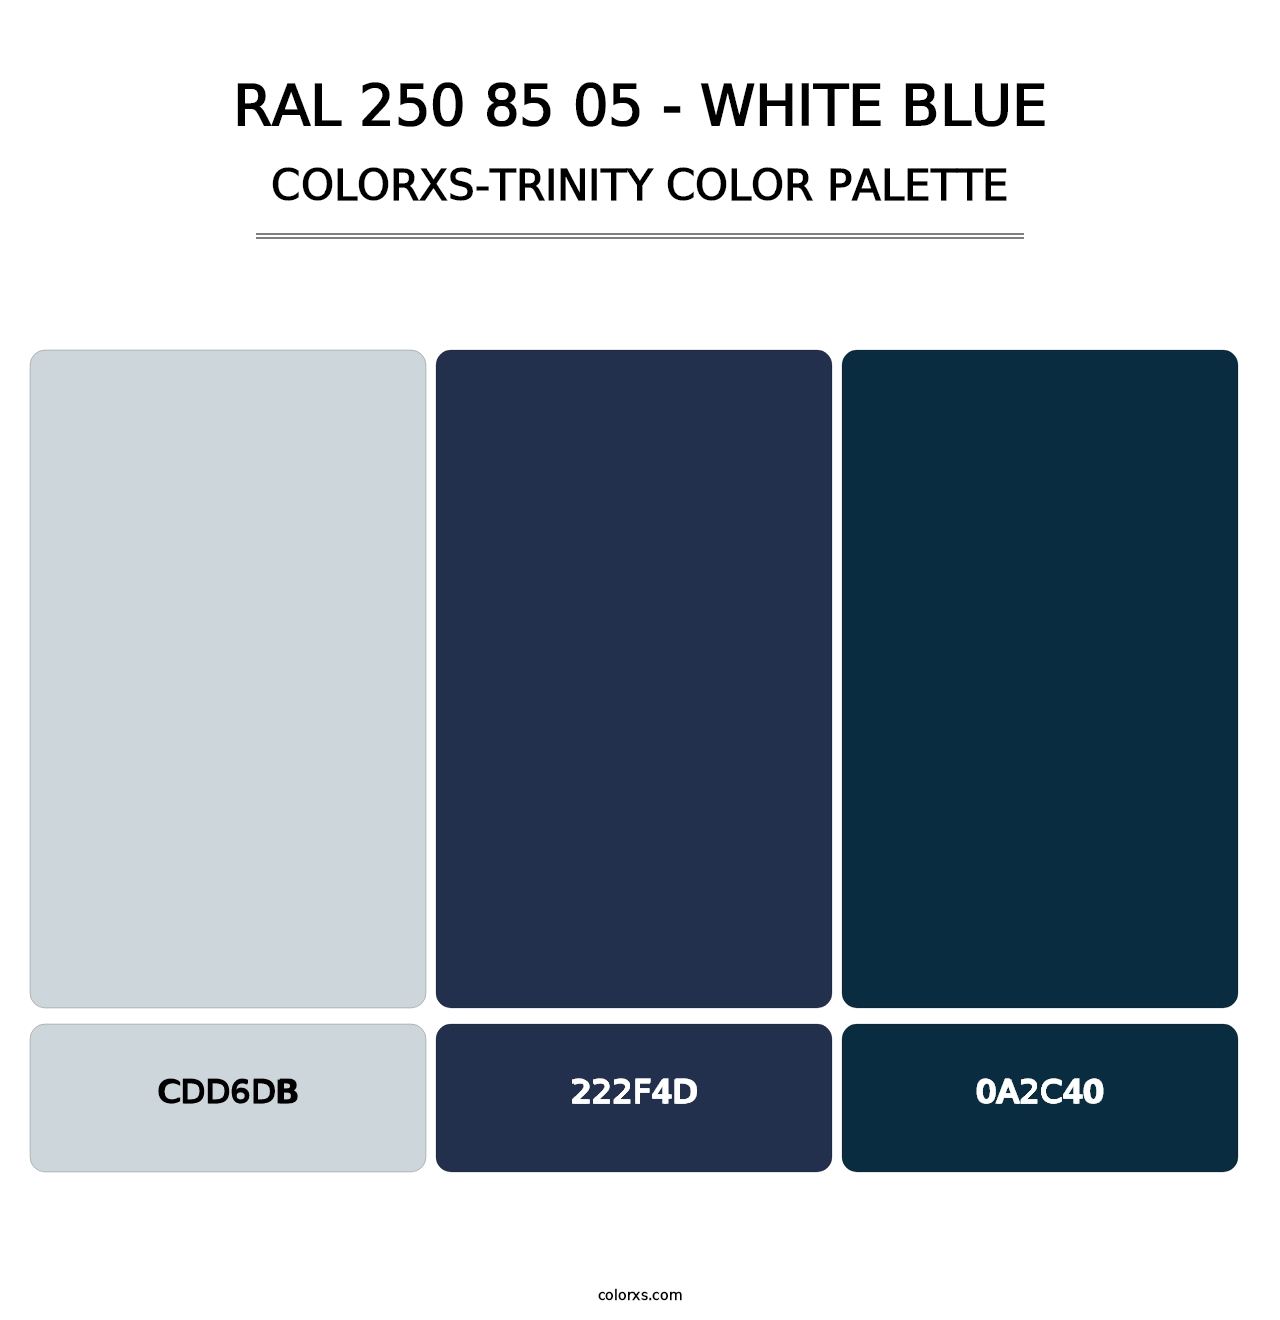 RAL 250 85 05 - White Blue - Colorxs Trinity Palette